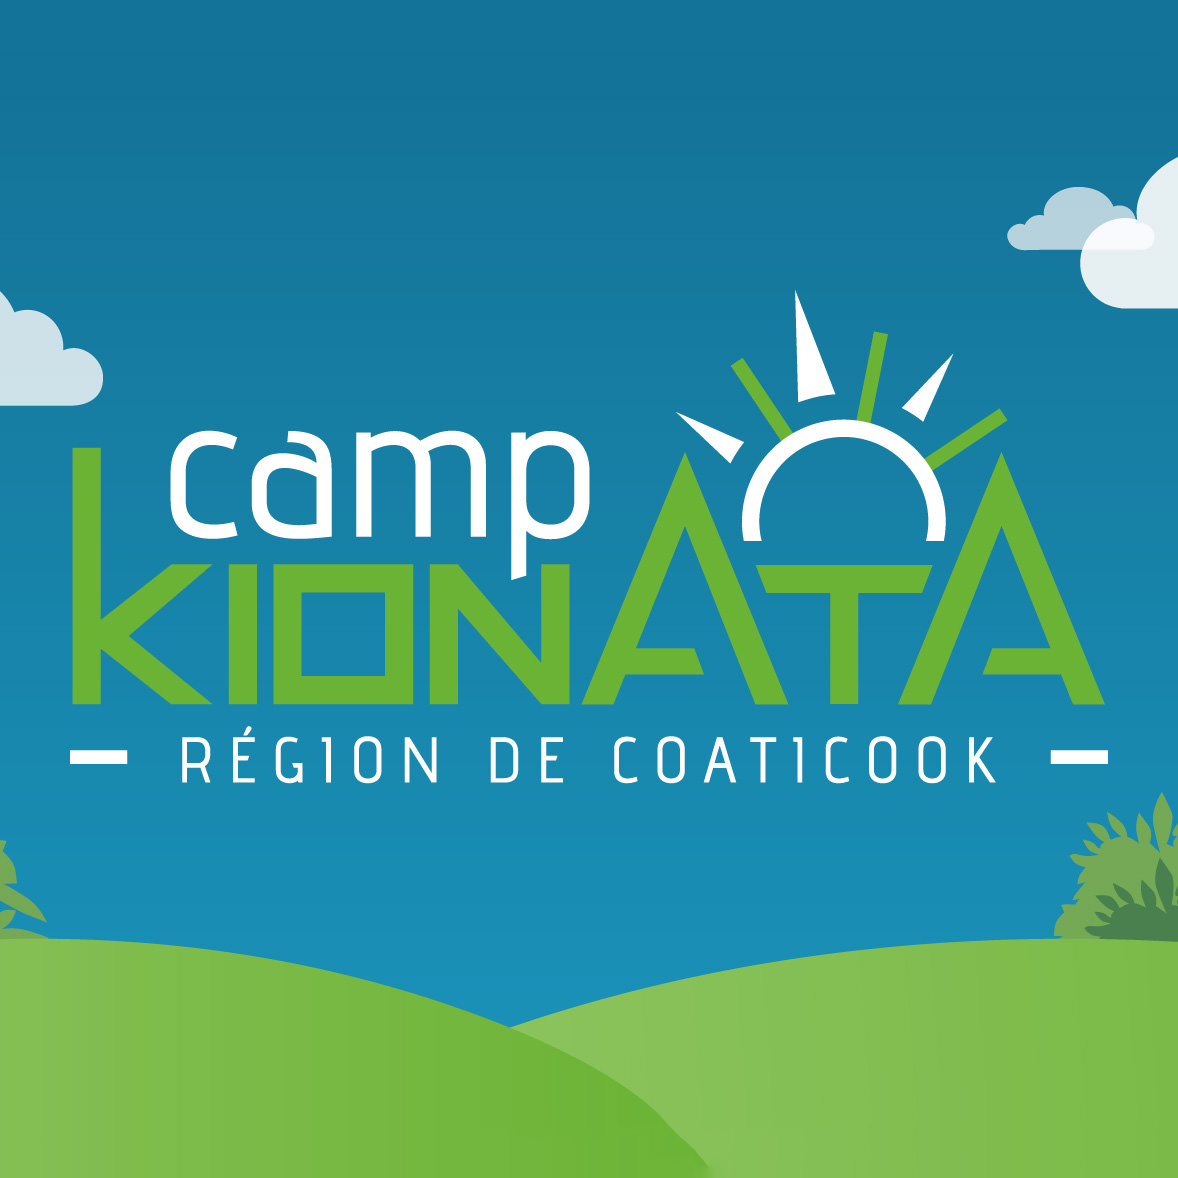 Camp Kionata